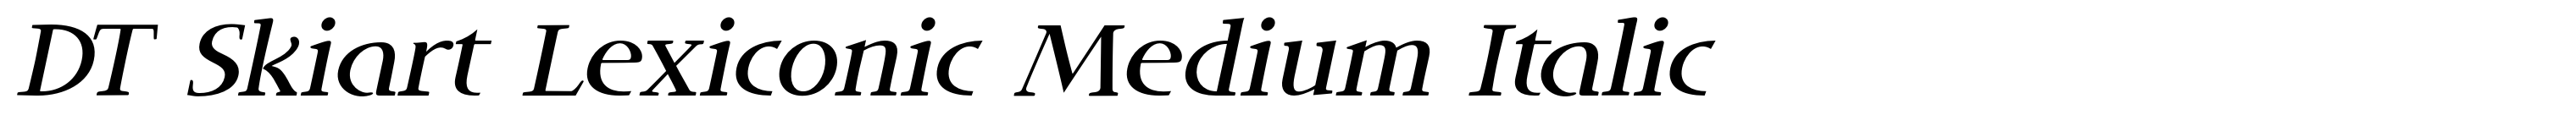 DT Skiart Lexiconic Medium Italic